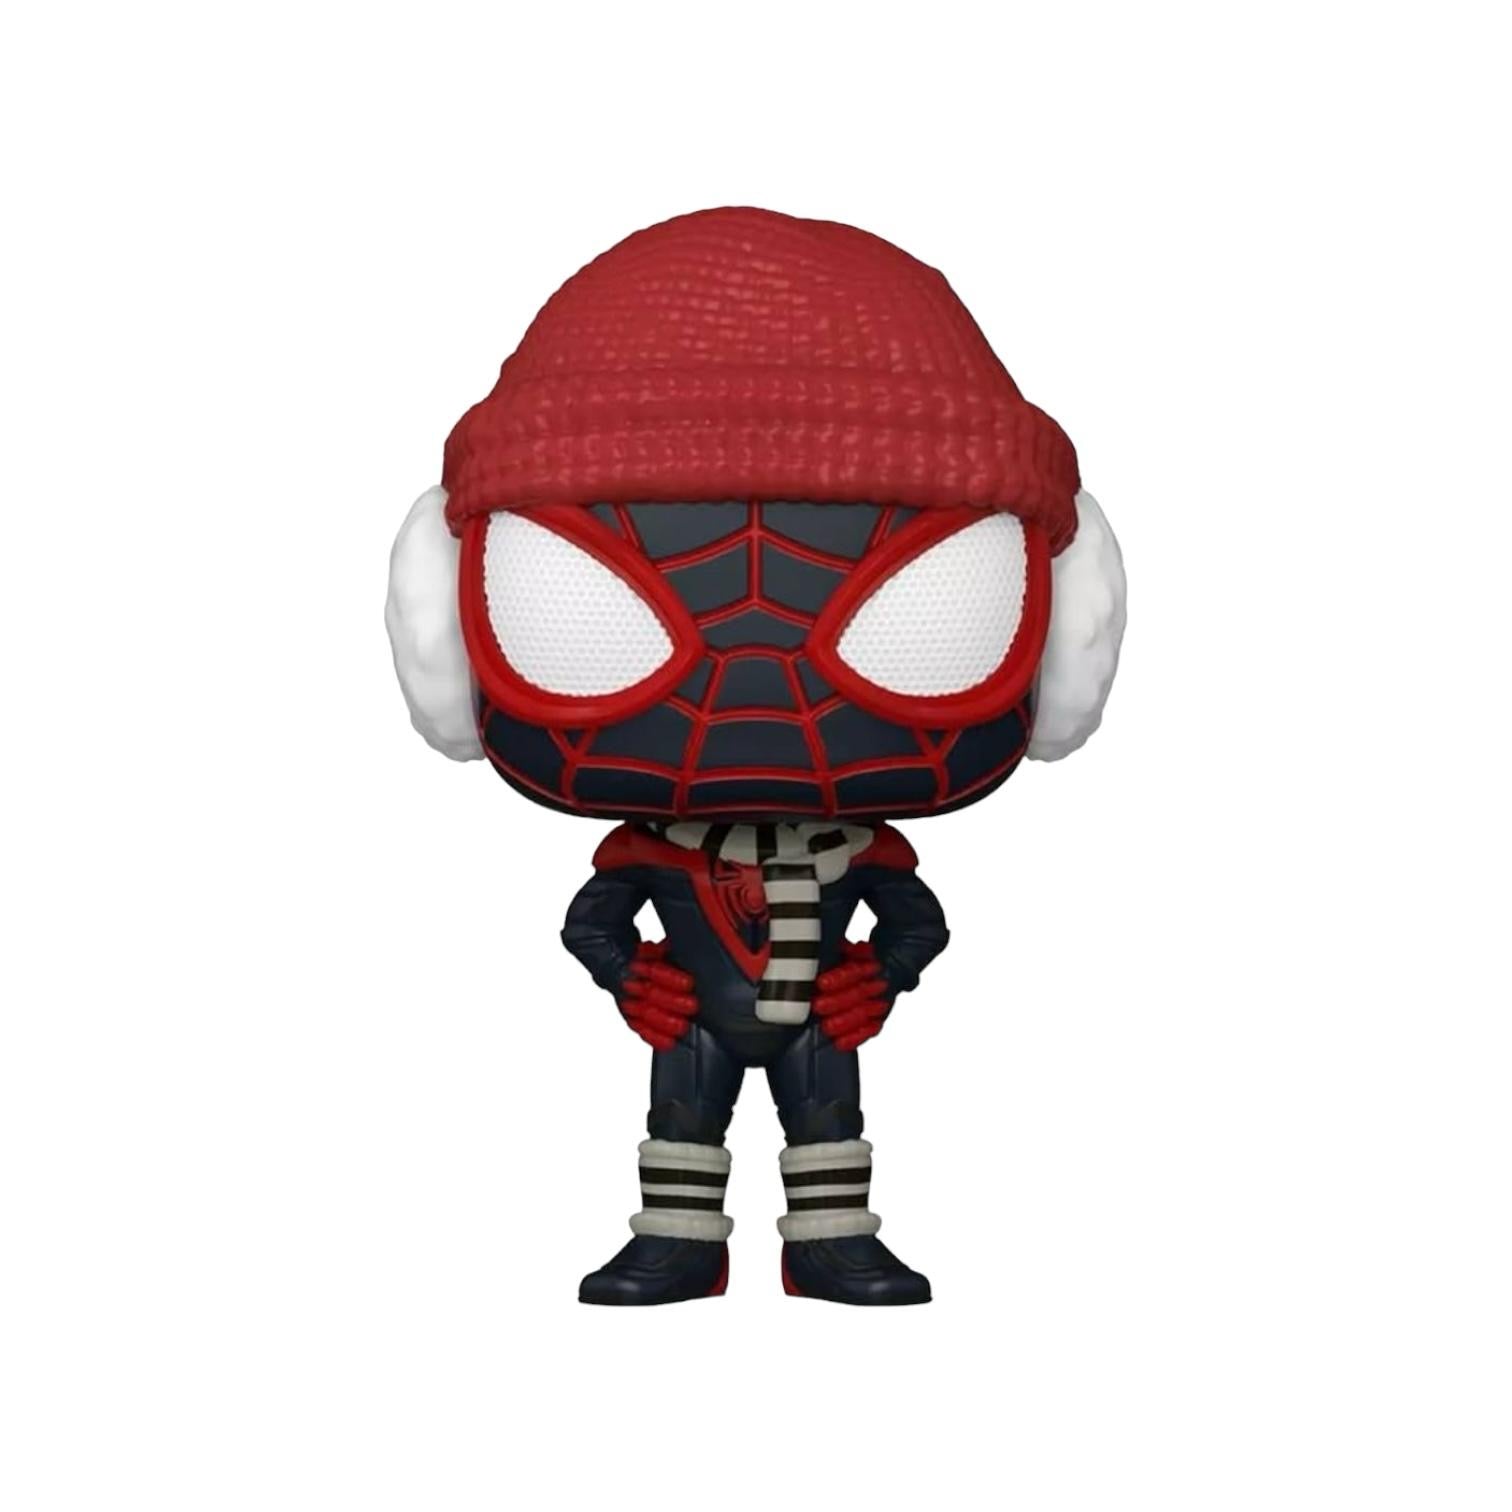 Miles Morales (Winter Suit) #1294 Funko Pop! - Spider-Man Miles Morales GamerVerse  - Pop Figures Exclusive